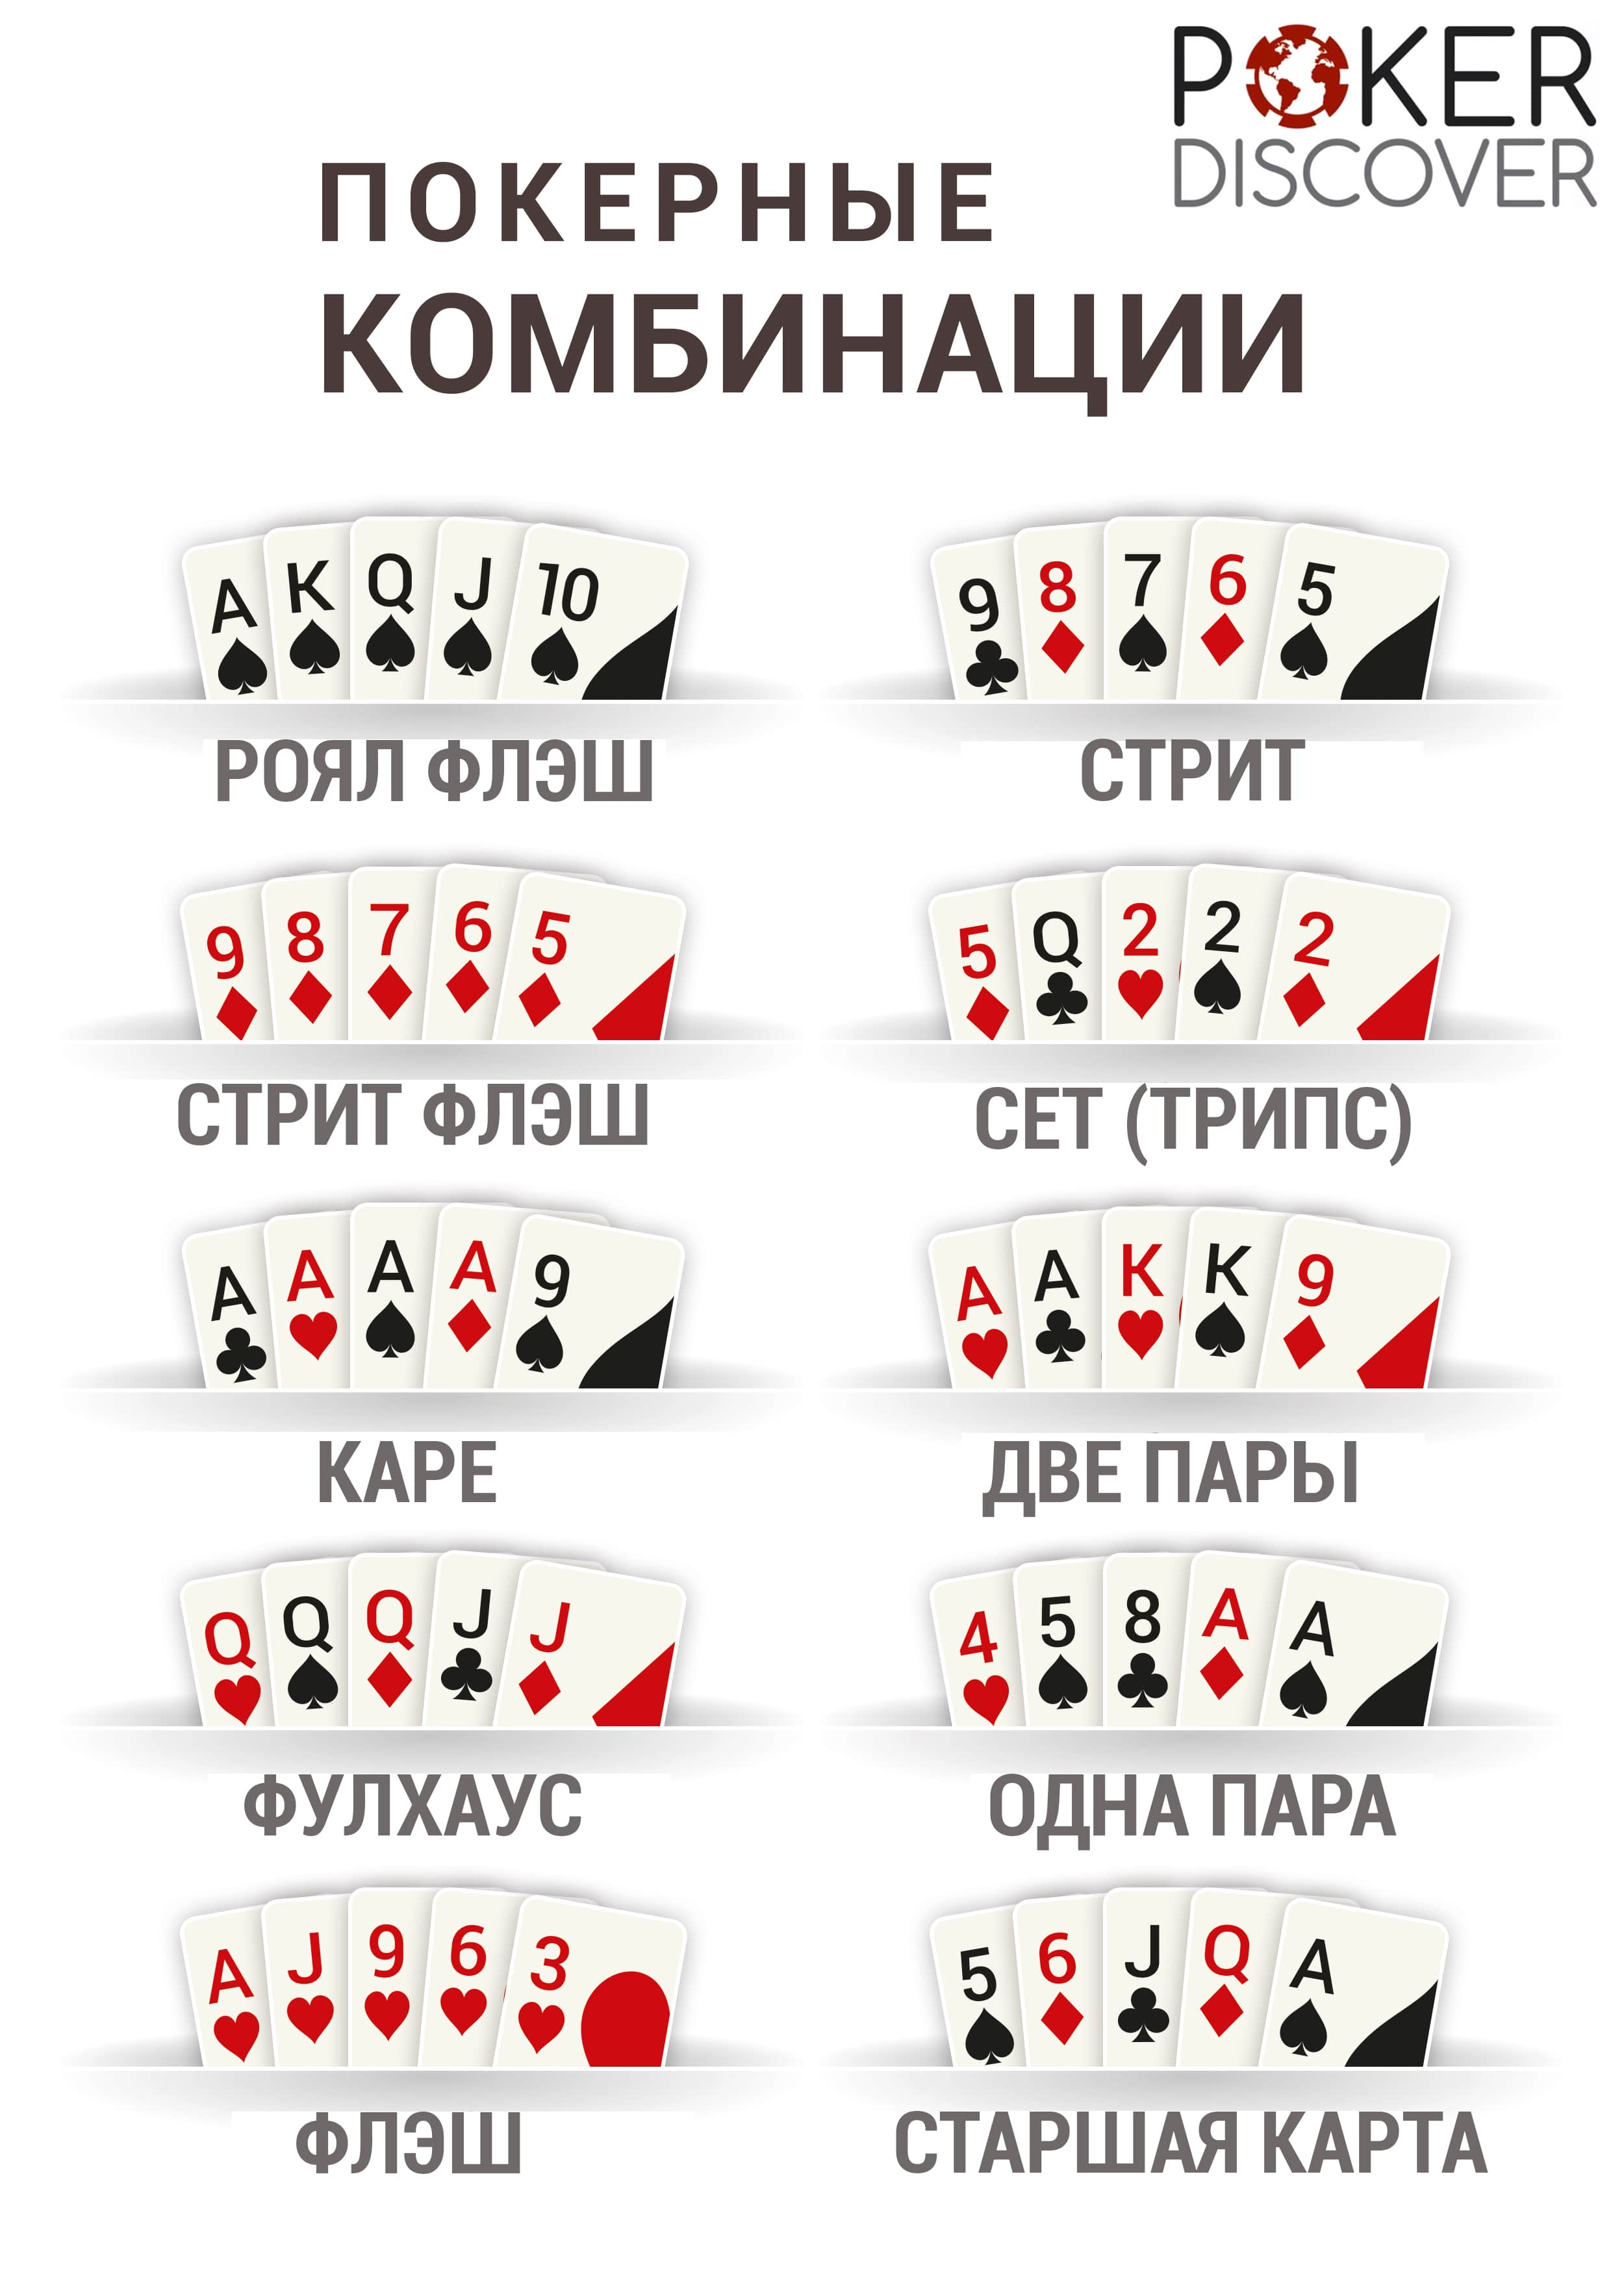 poker-hand-rankings-min.jpg